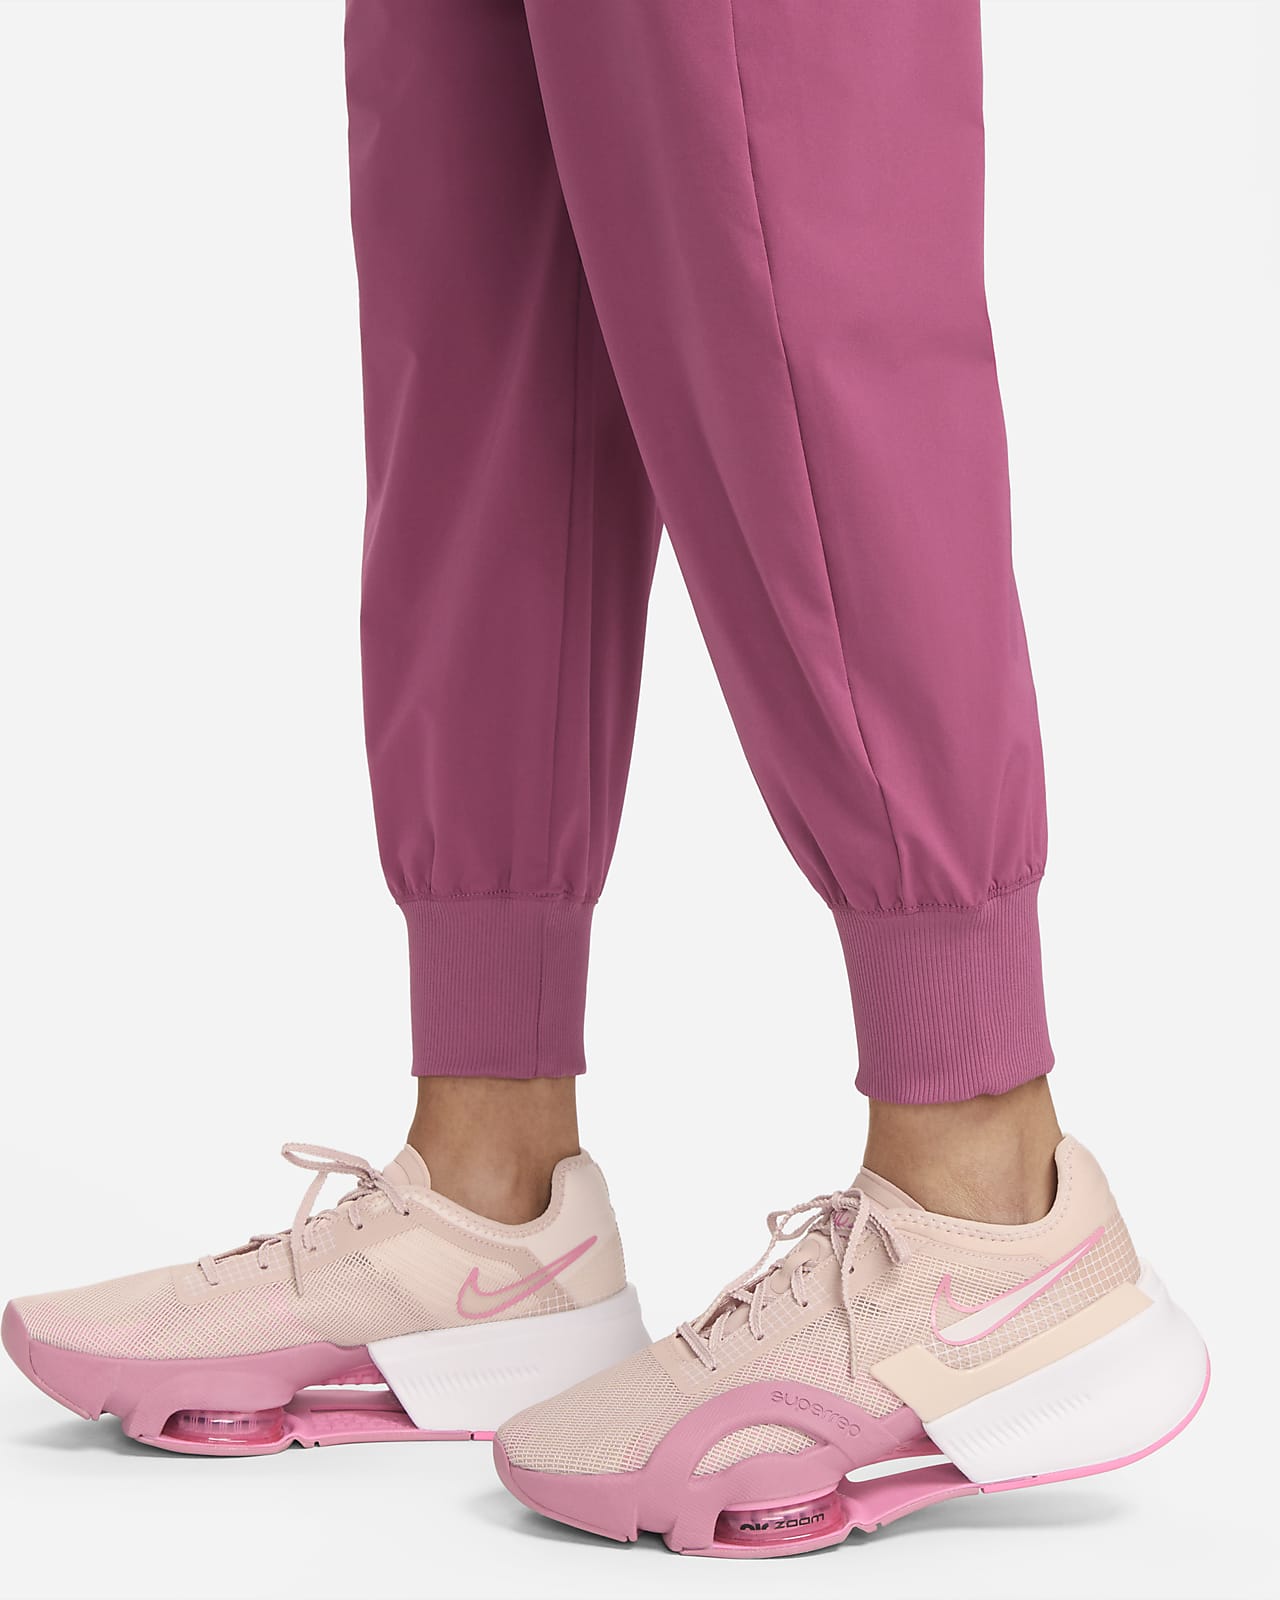 Nike Dri-FIT Bliss High-Waisted 7/8 Trousers, Pants & Sweats